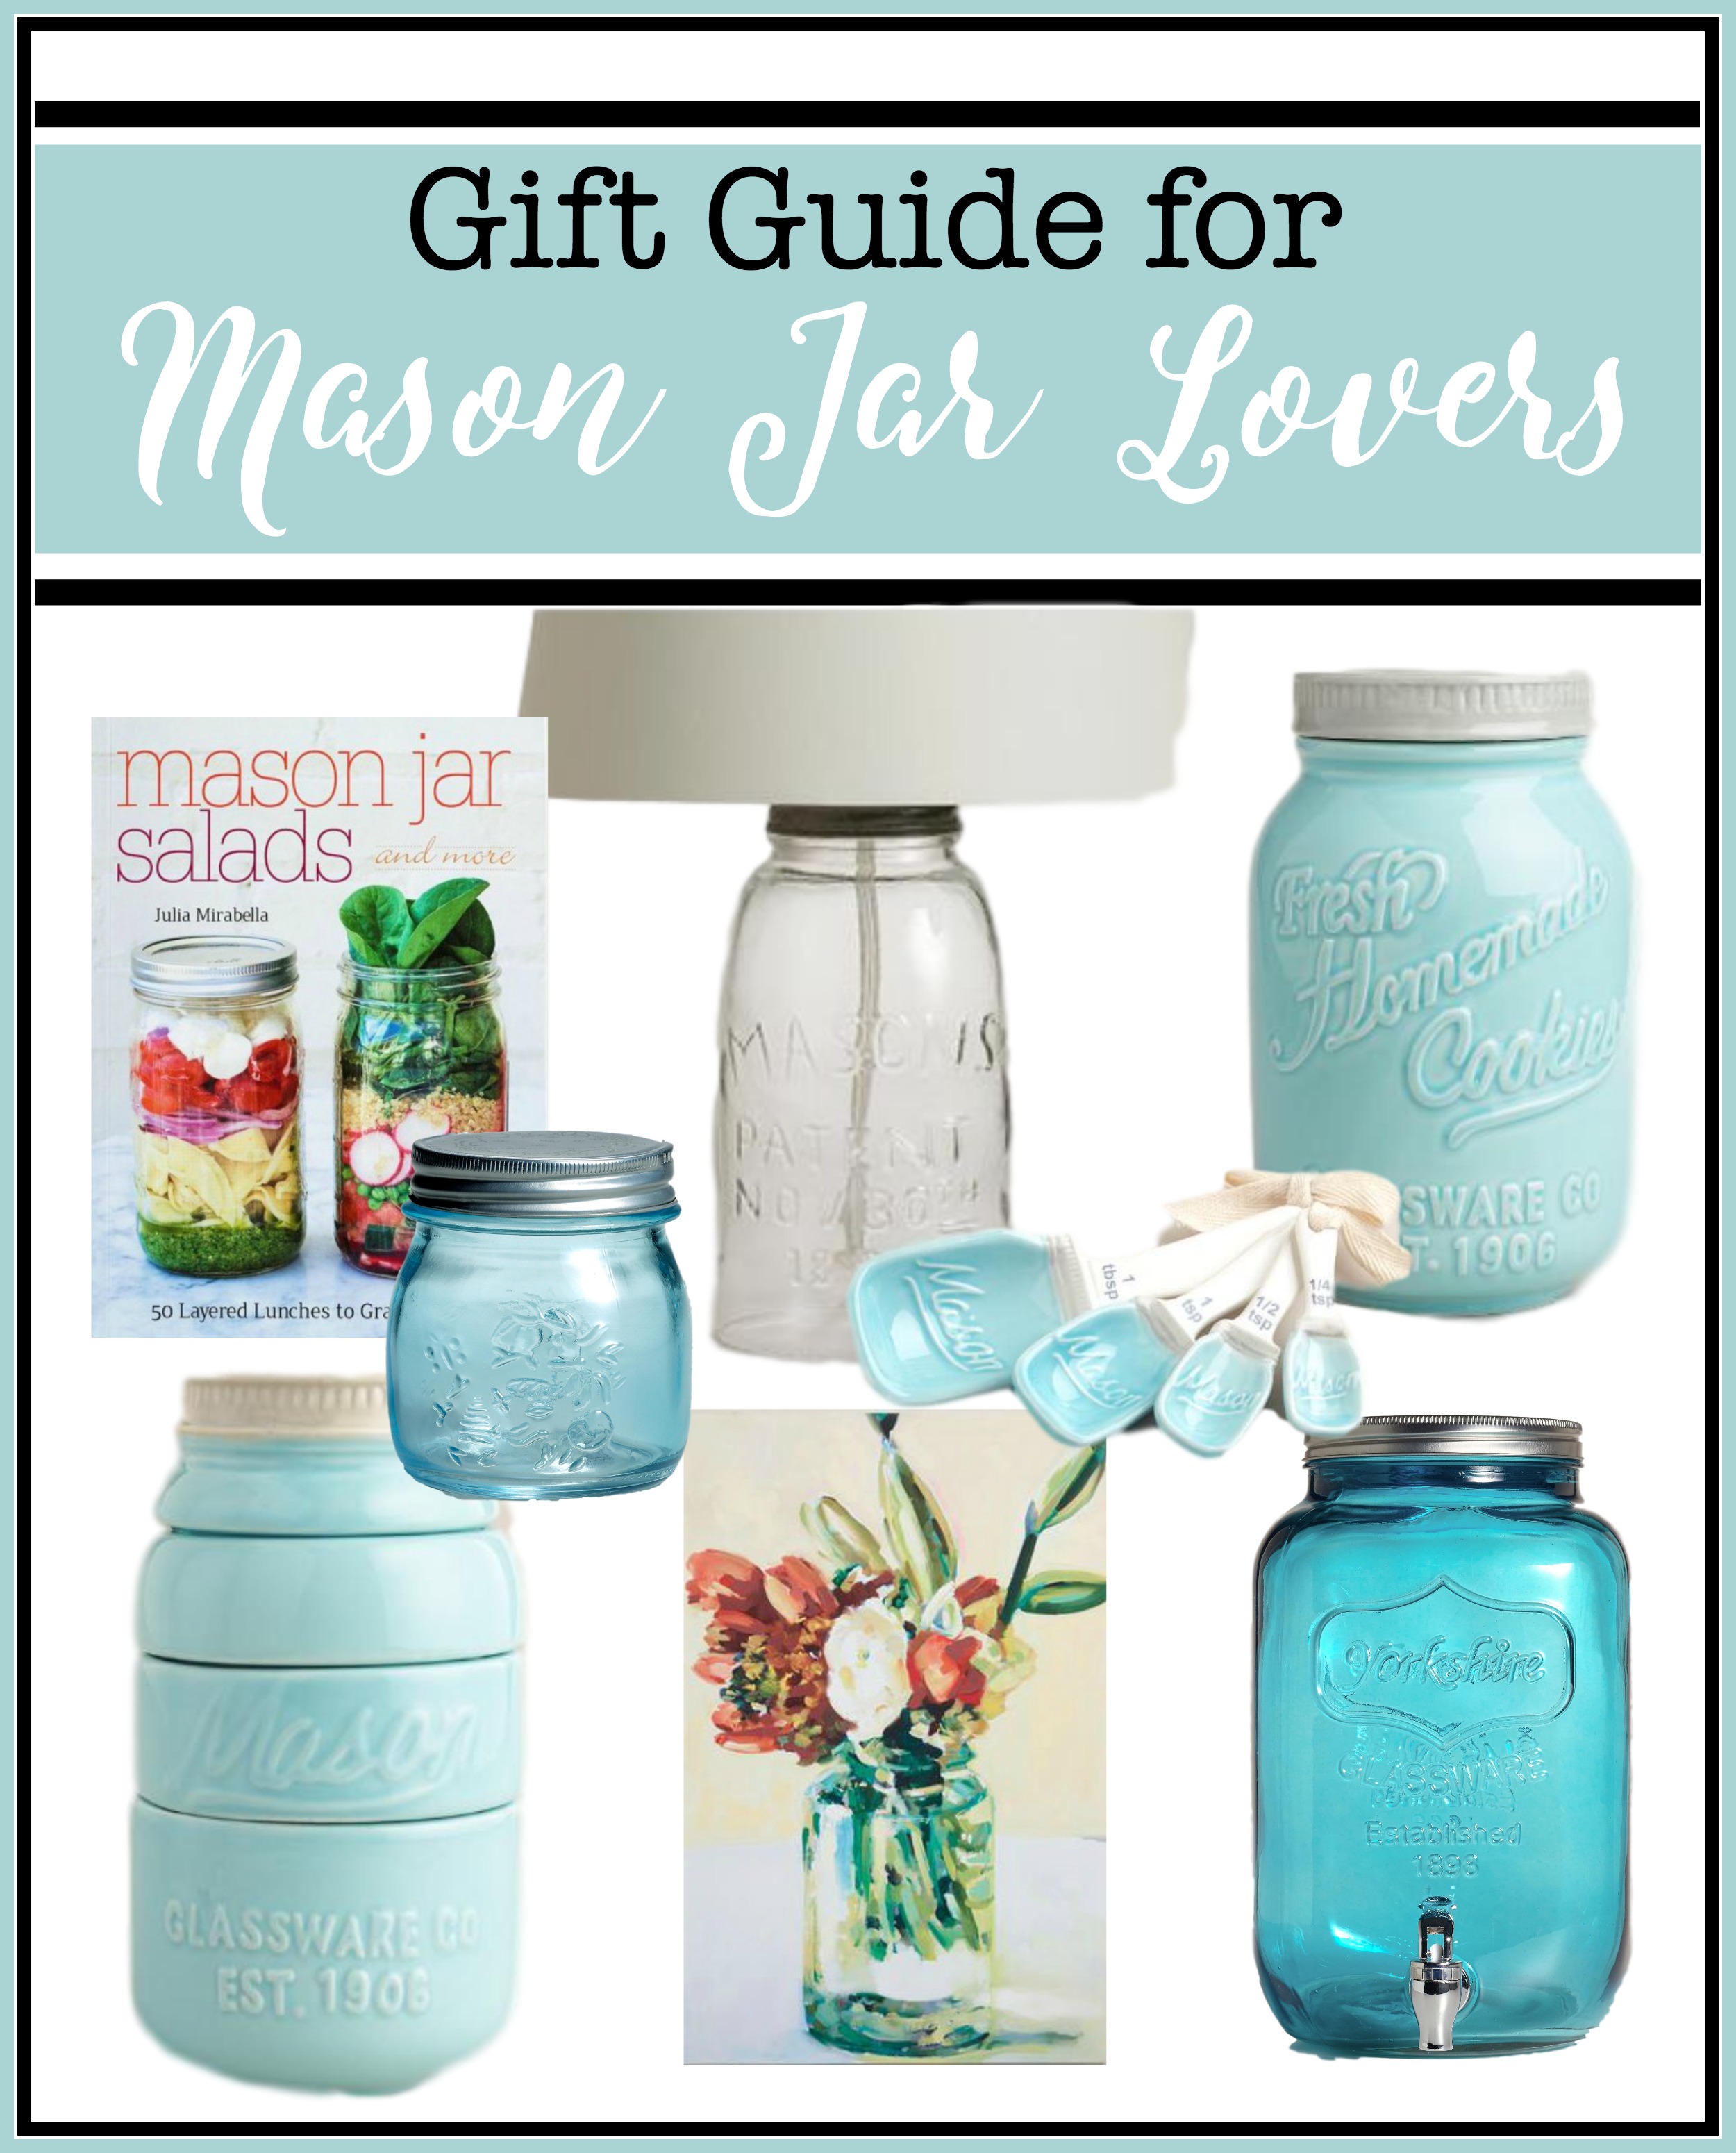 Gift Guide for Mason Jar Lovers | The Everyday Home | www.everydayhomeblog.com